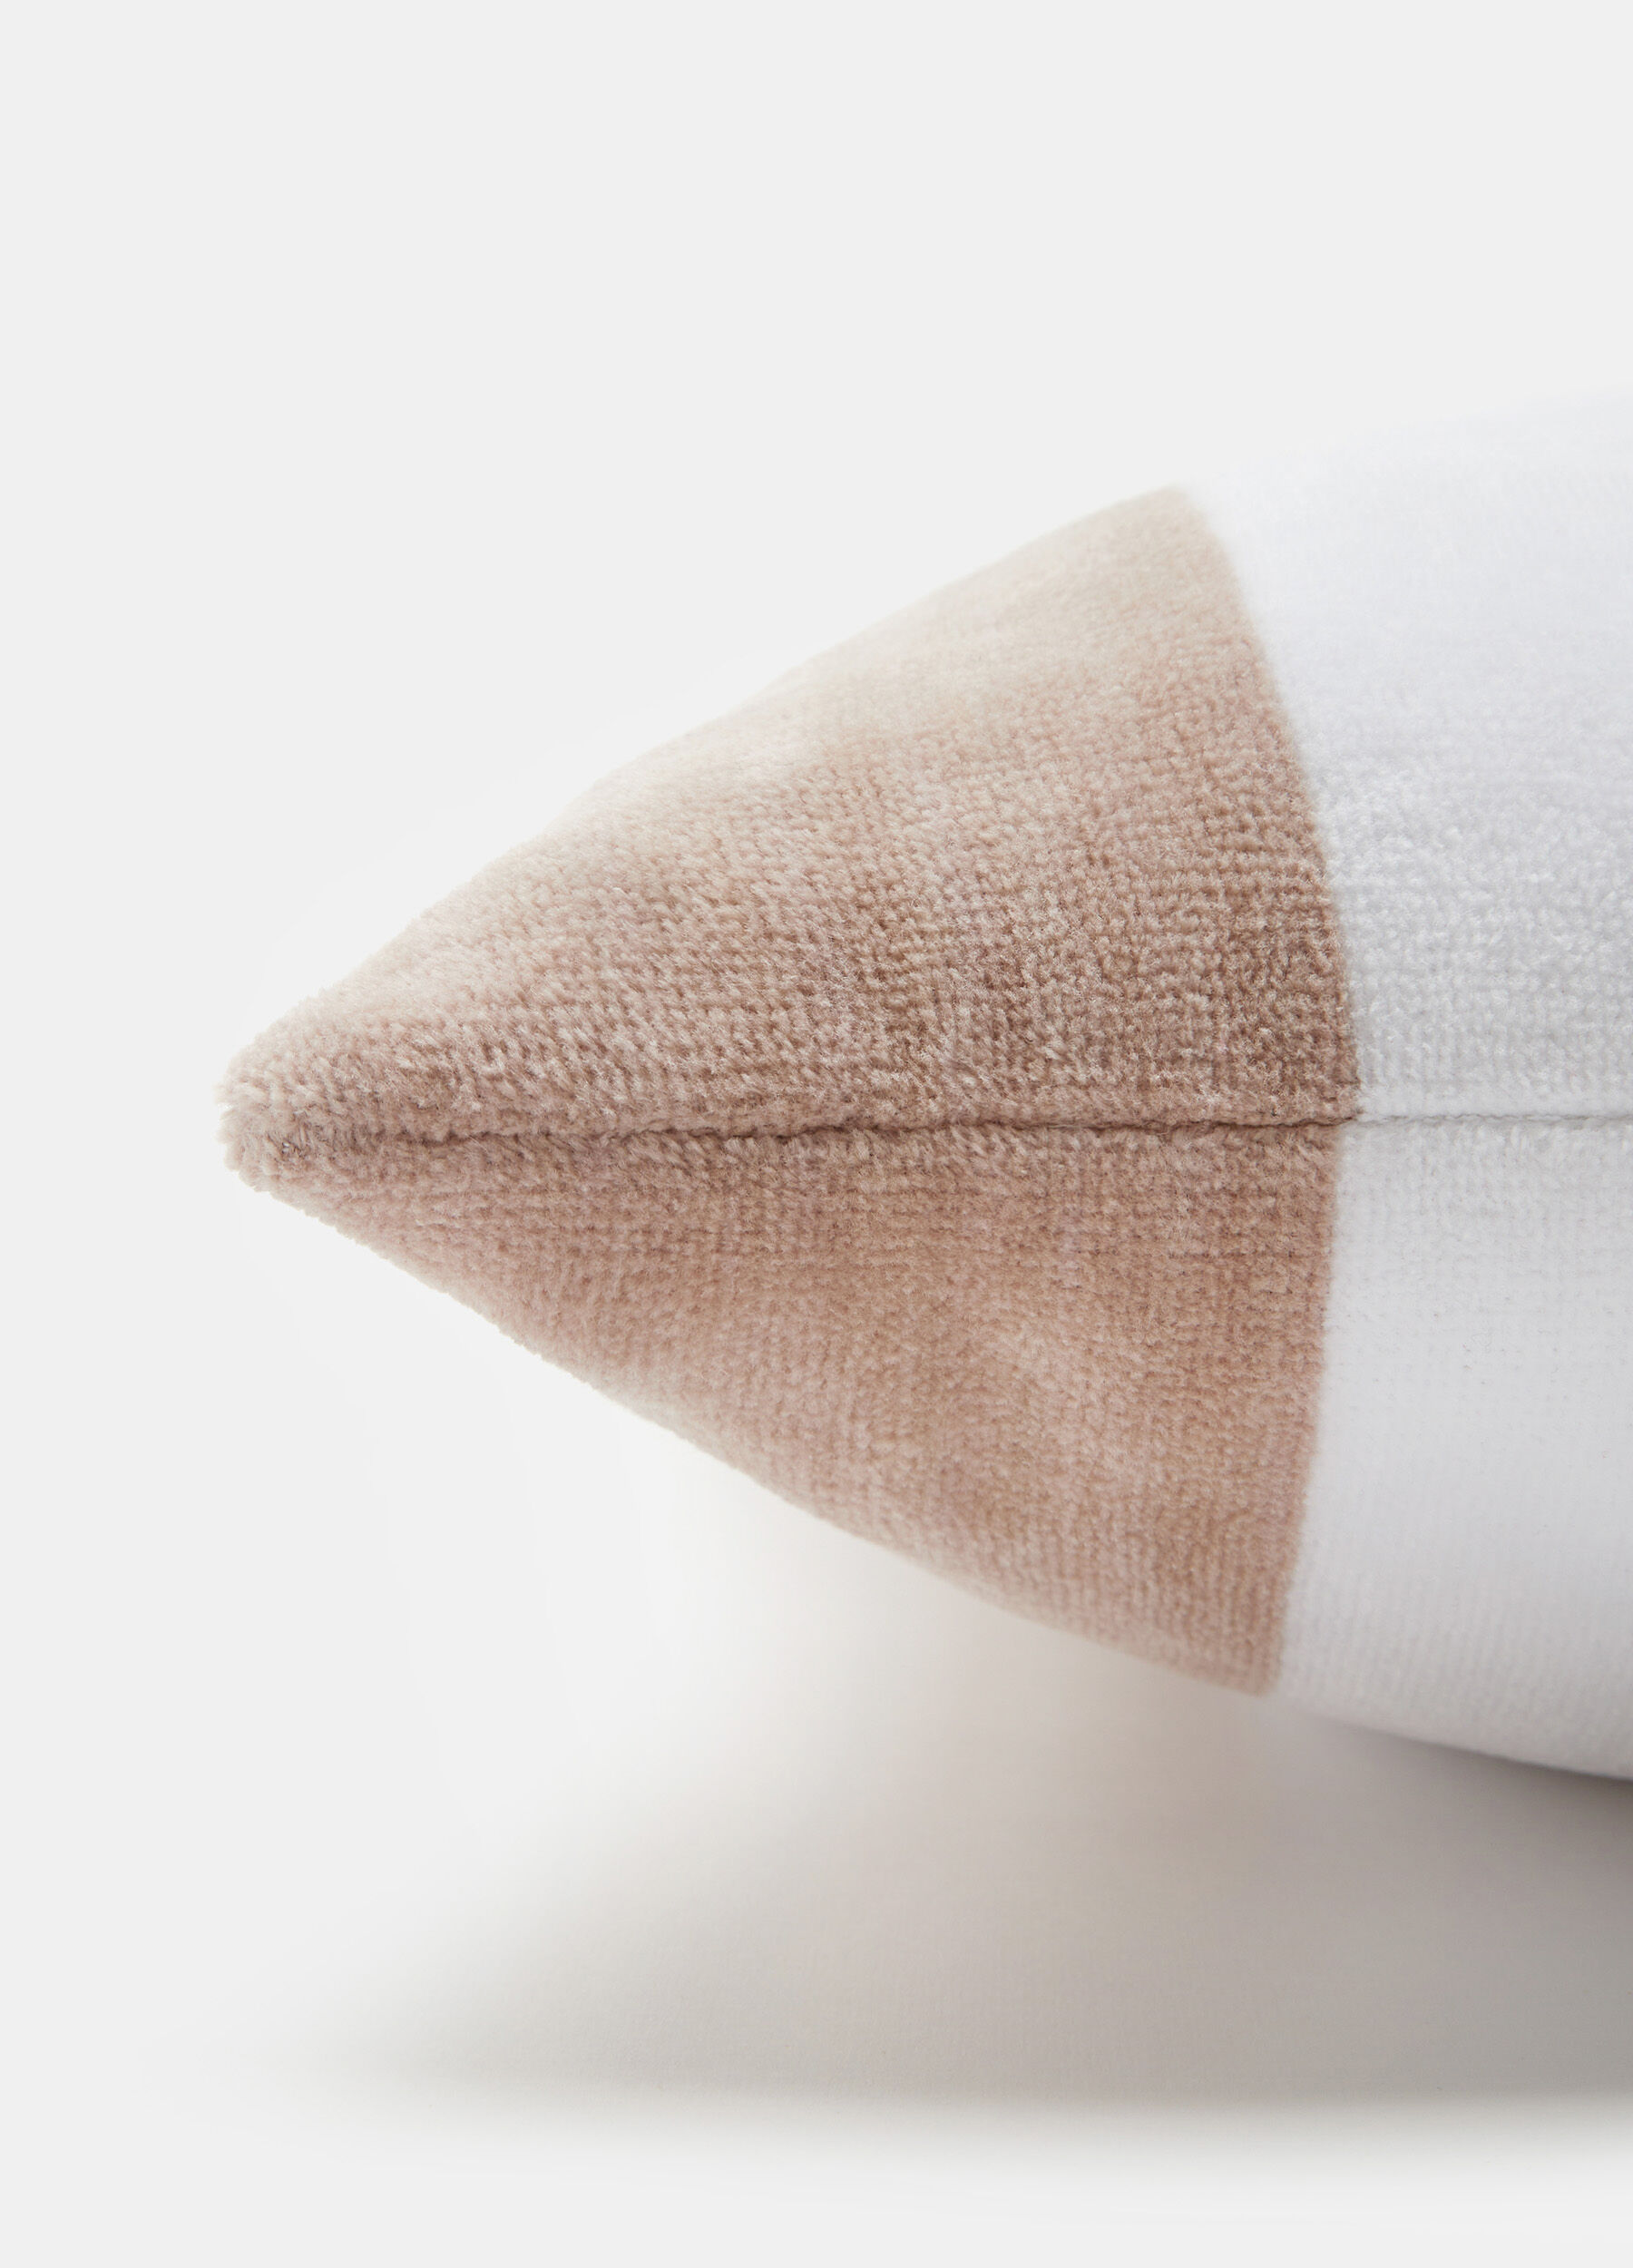 Striped cushion cover in cotton chenille